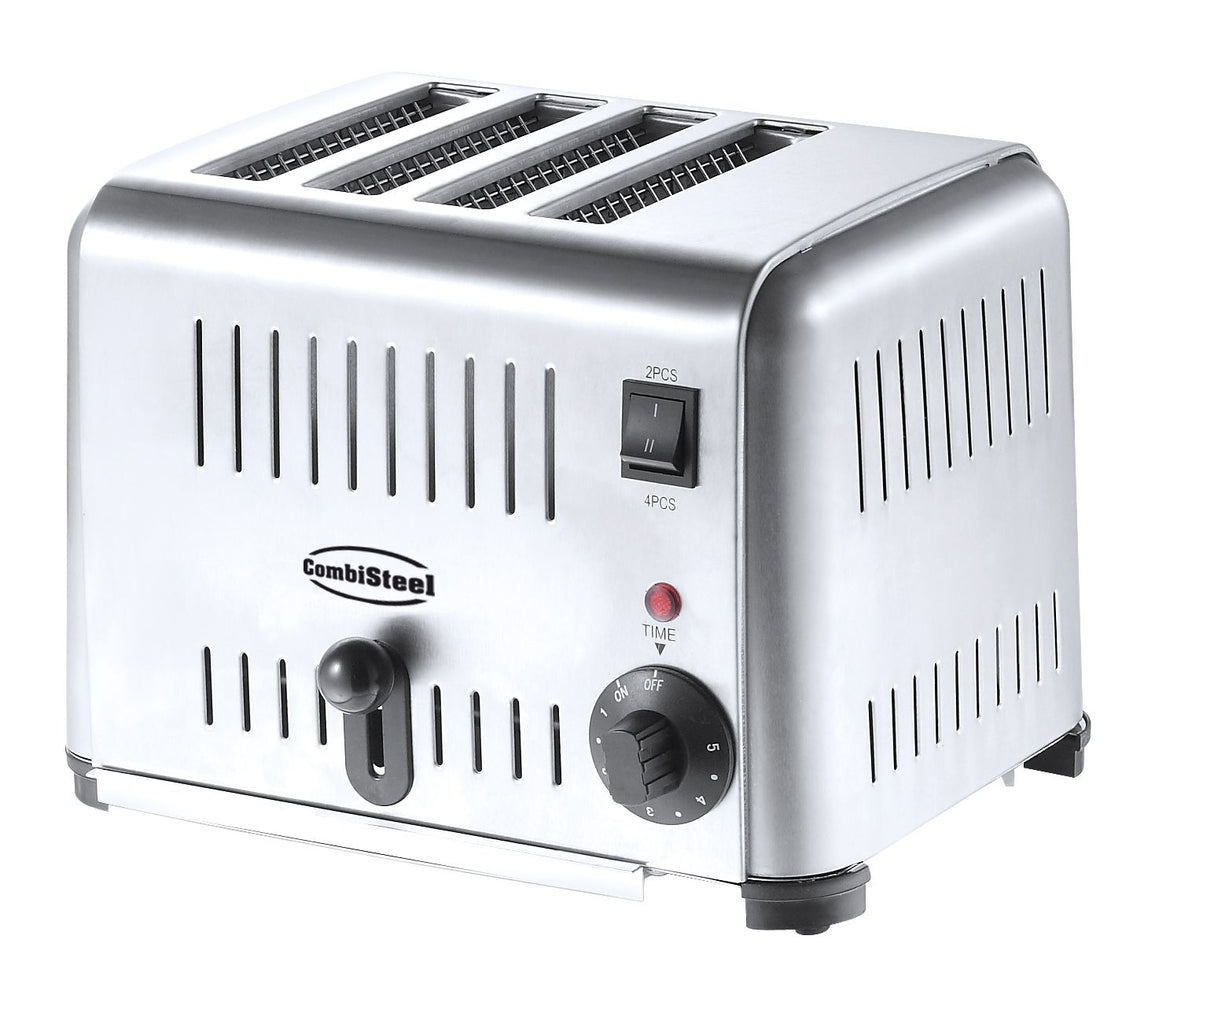 Combisteel Commercial Toaster 4 Slice - 7455.1635